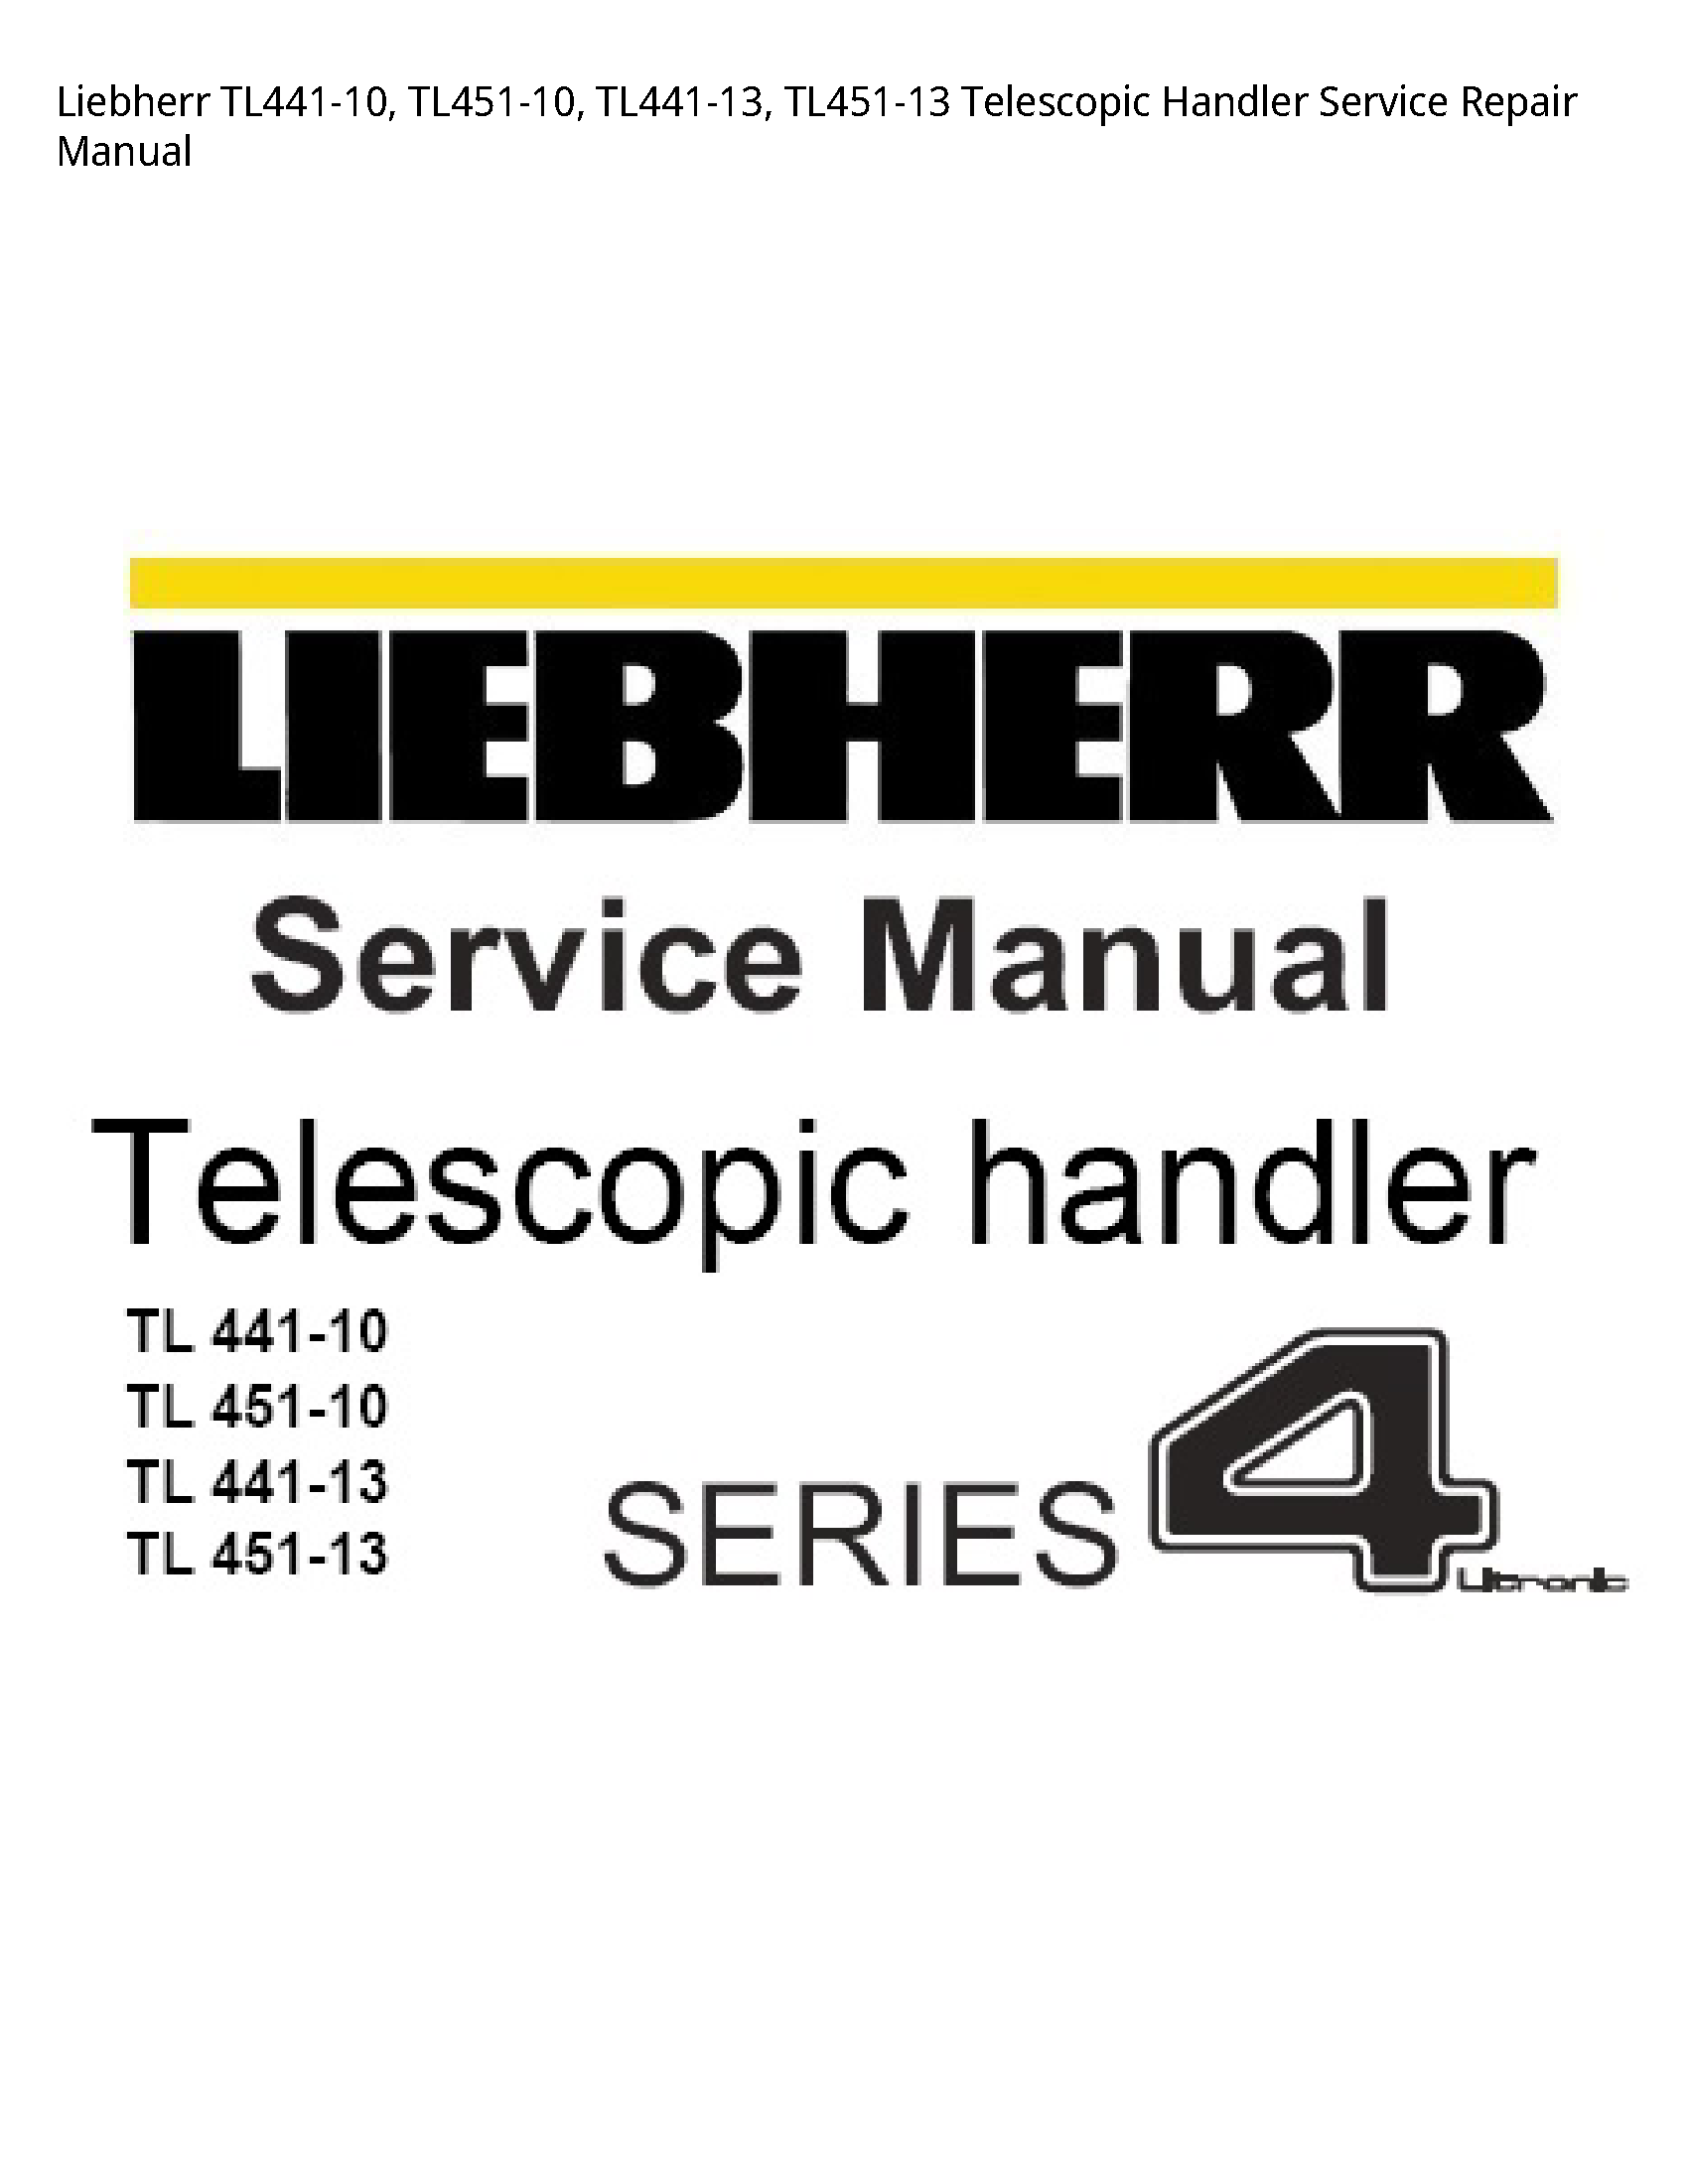 Liebherr TL441-10 Telescopic Handler manual